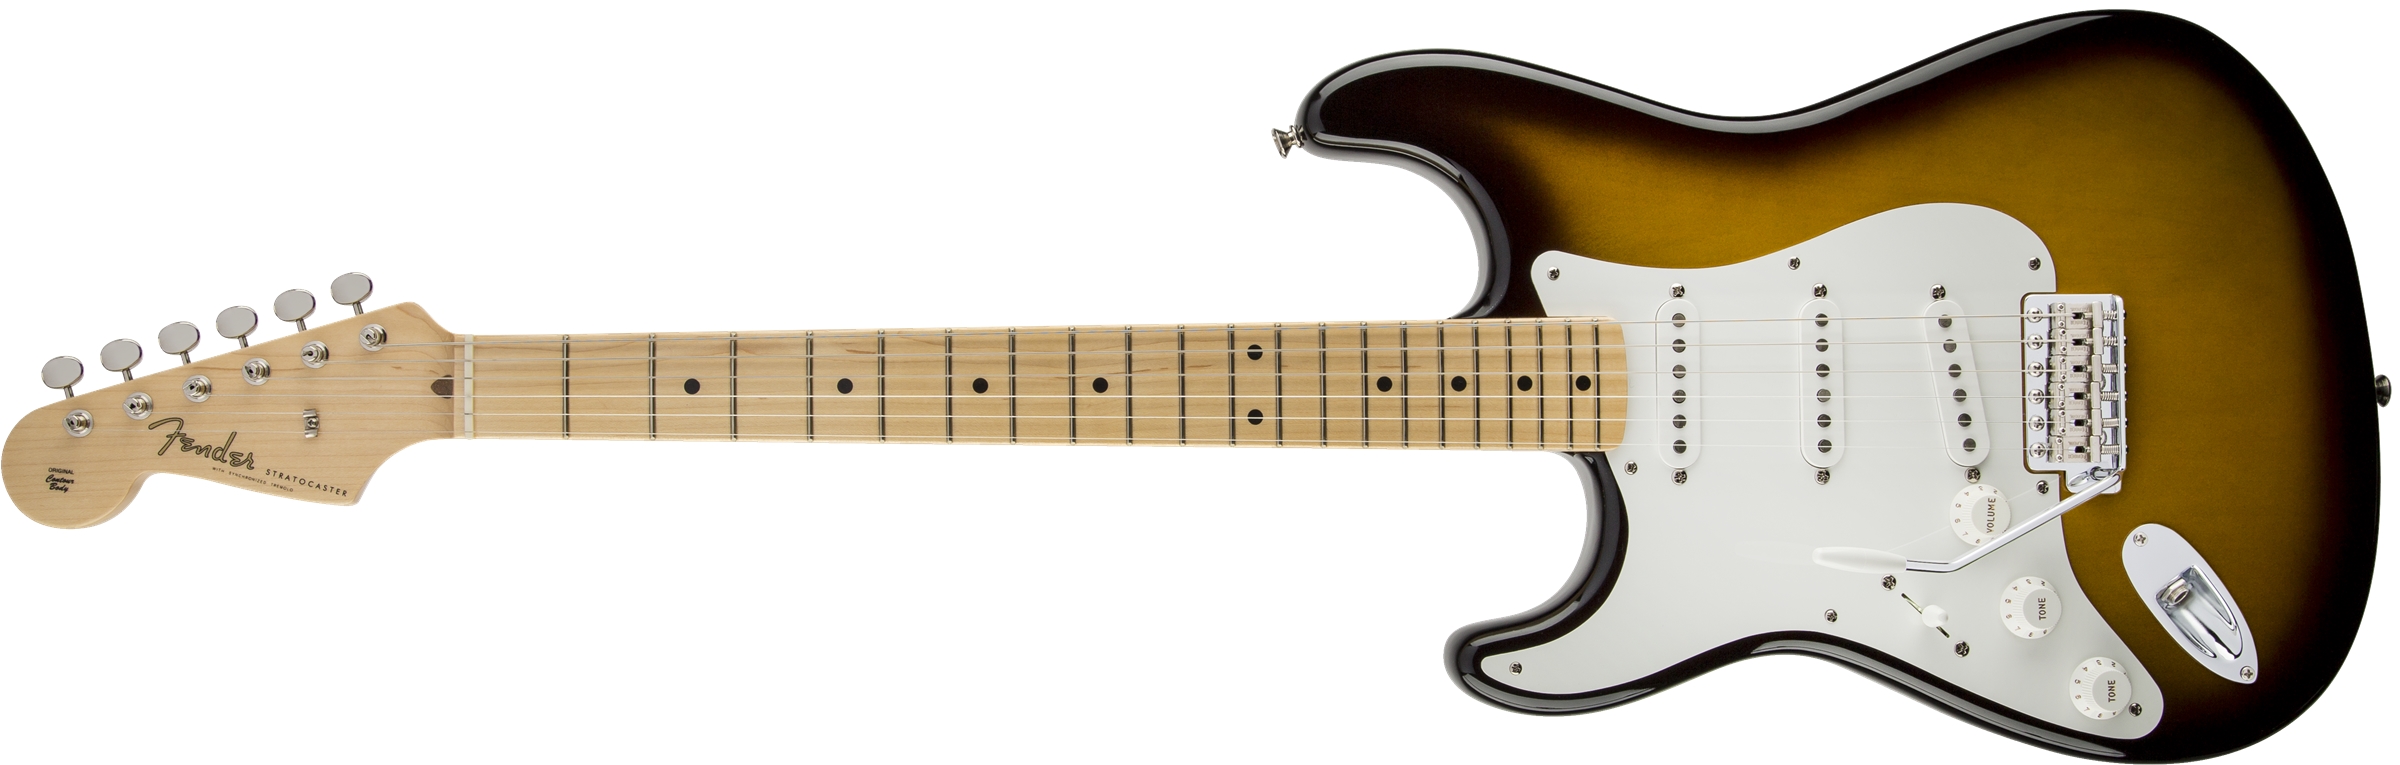 Fender American Vintage '56 Stratocaster image (#526936) - Audiofanzine